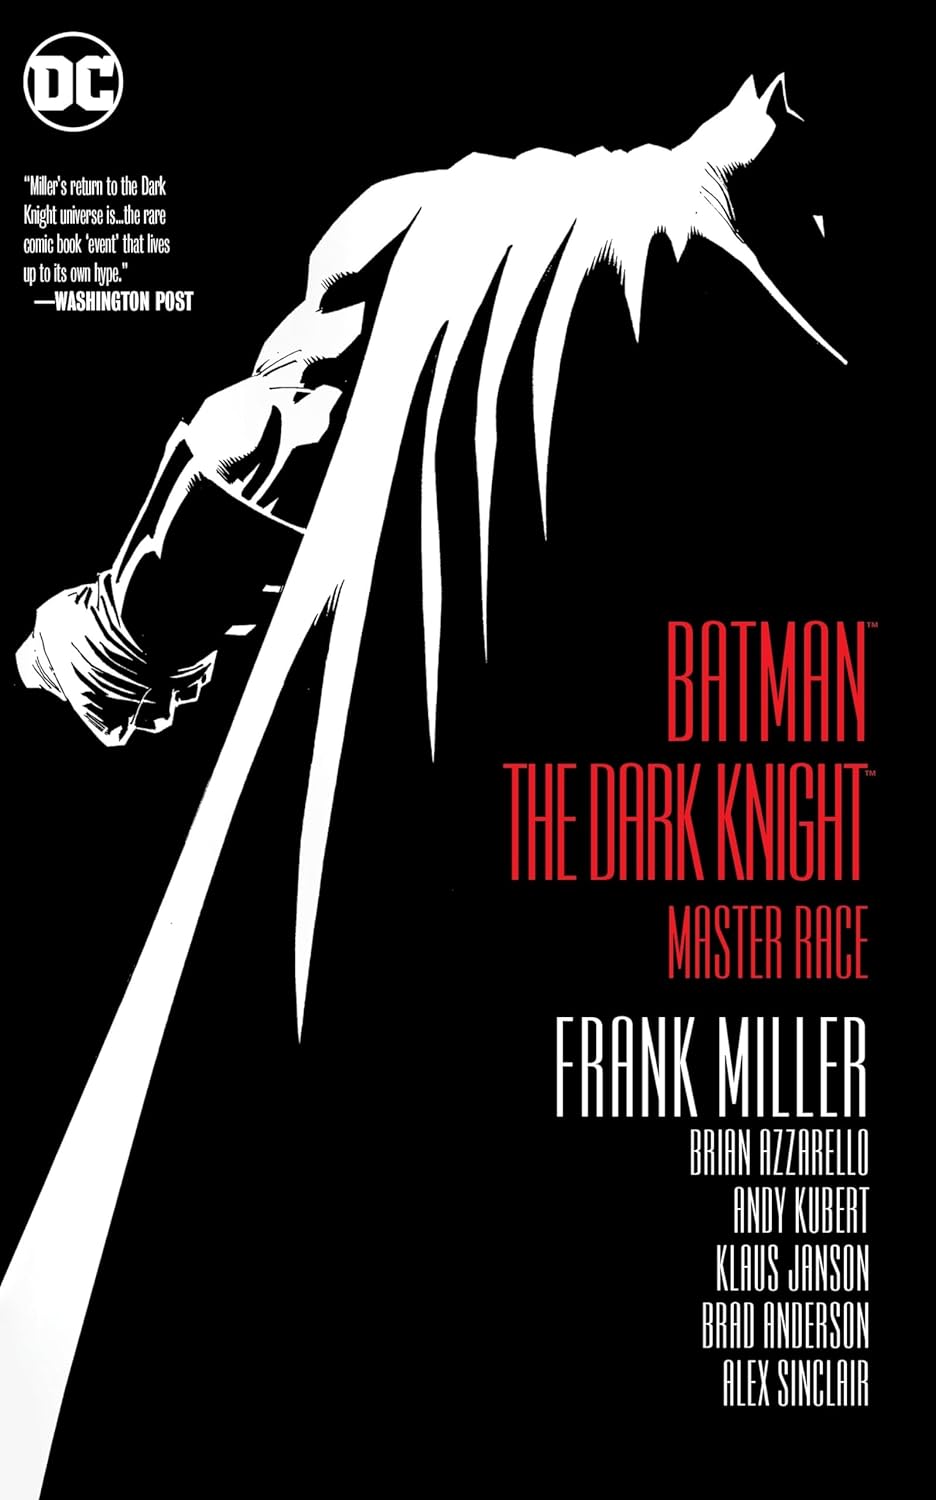 Batman: The Dark Knight III - The Master Race/Frank Miller, Brian Azzarello, and Andy Kubert